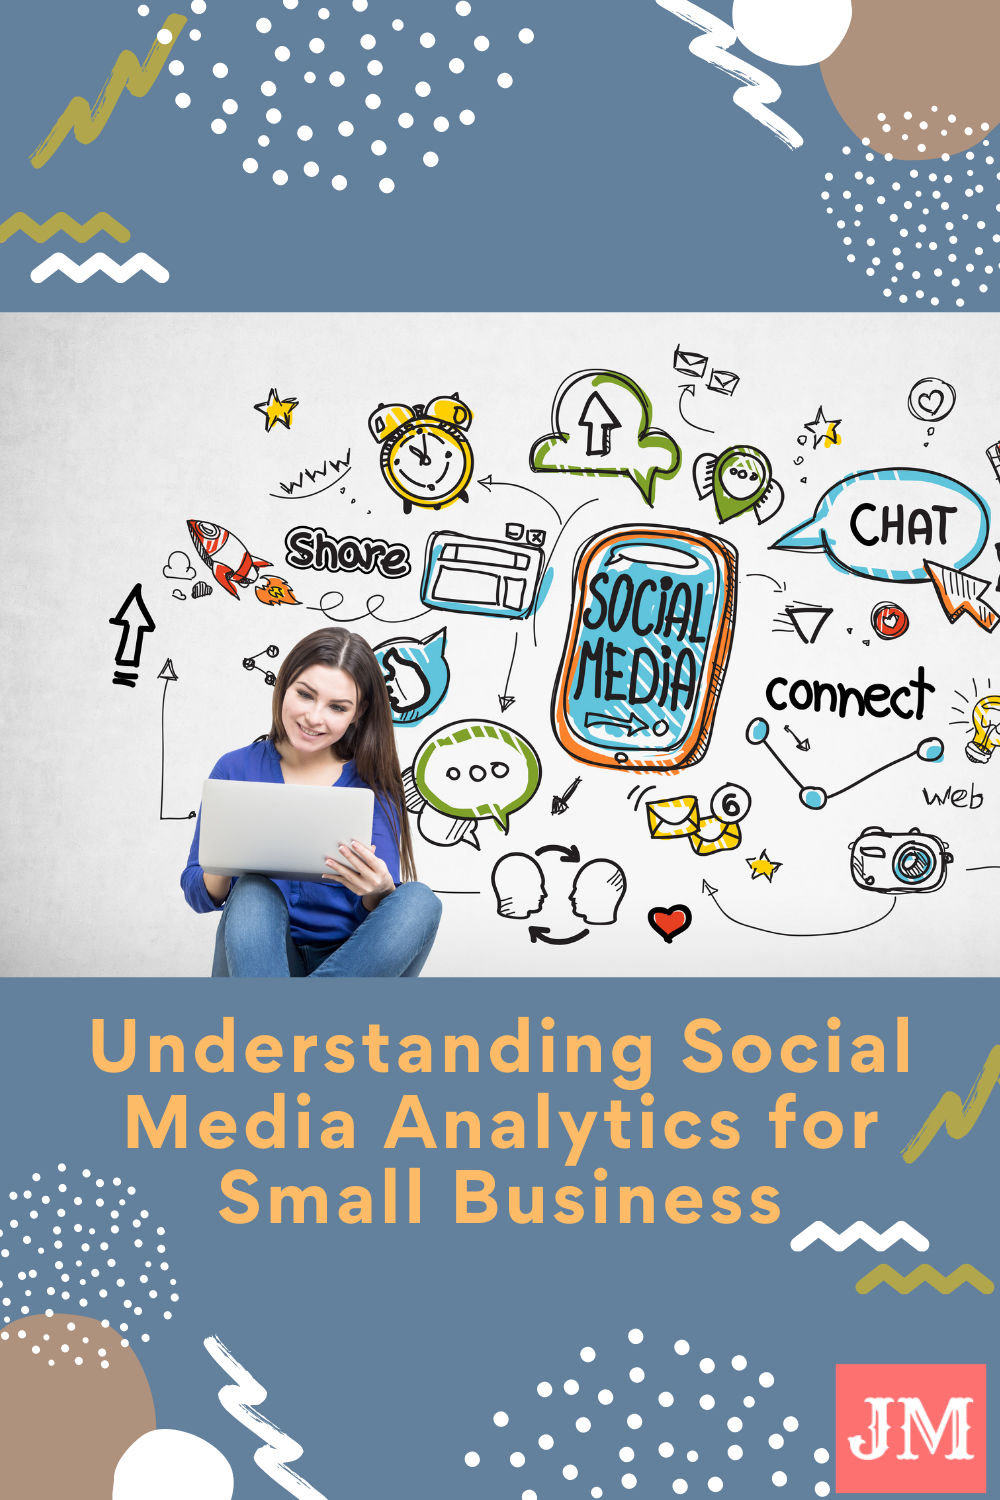 Social Media Analytics for Small Business - JM Integrated Marketing